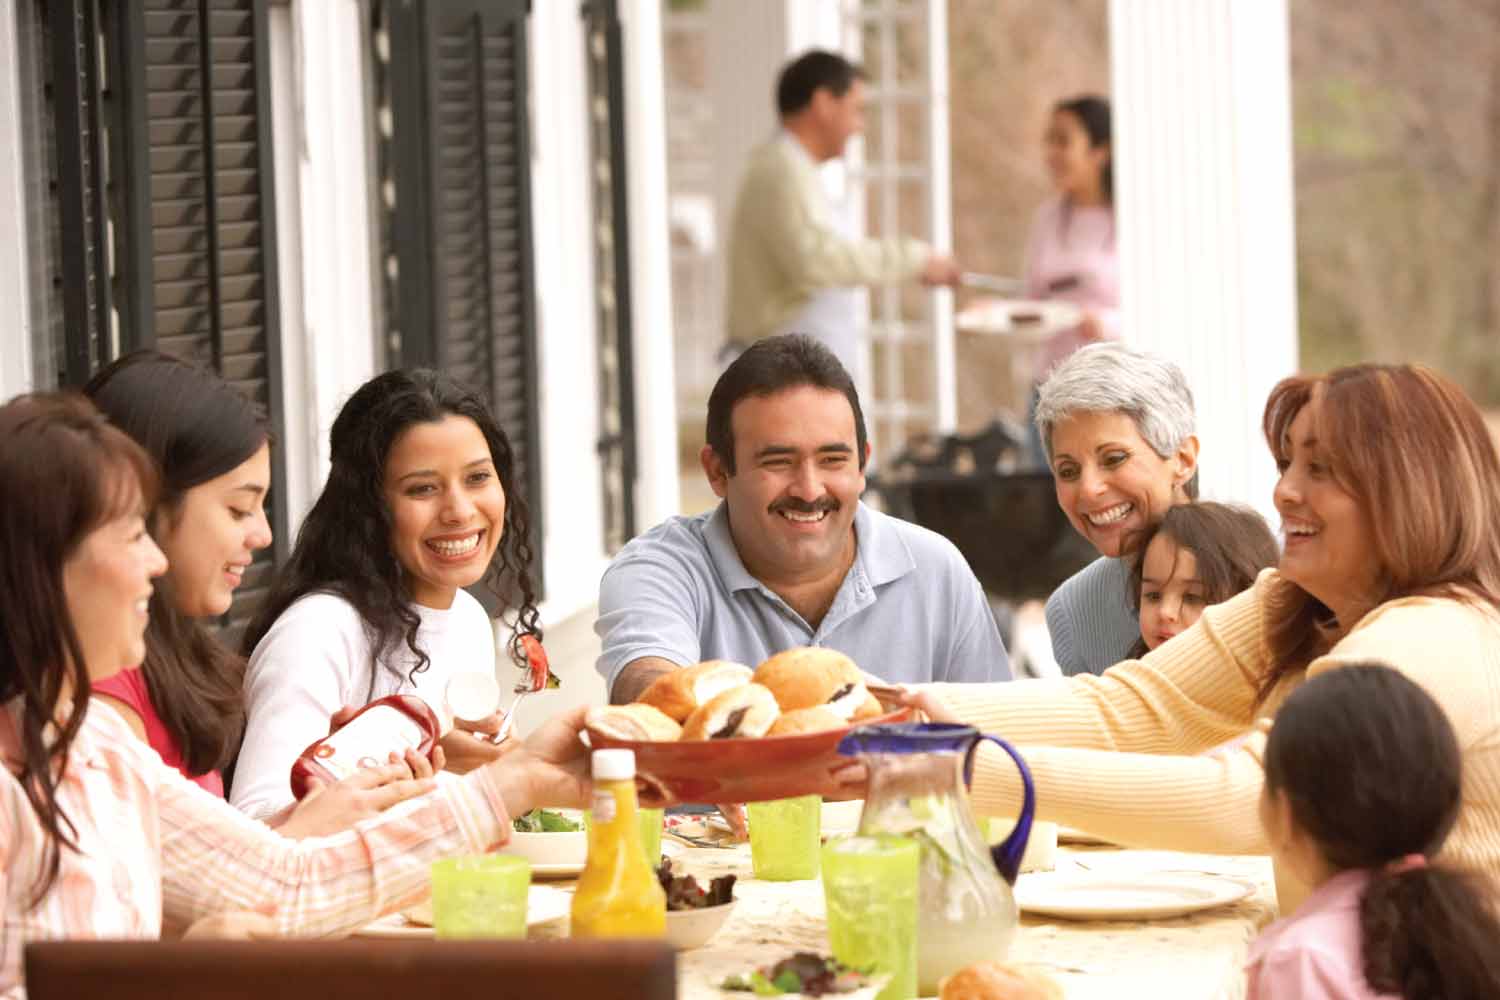 Hispanic family eating outside together.